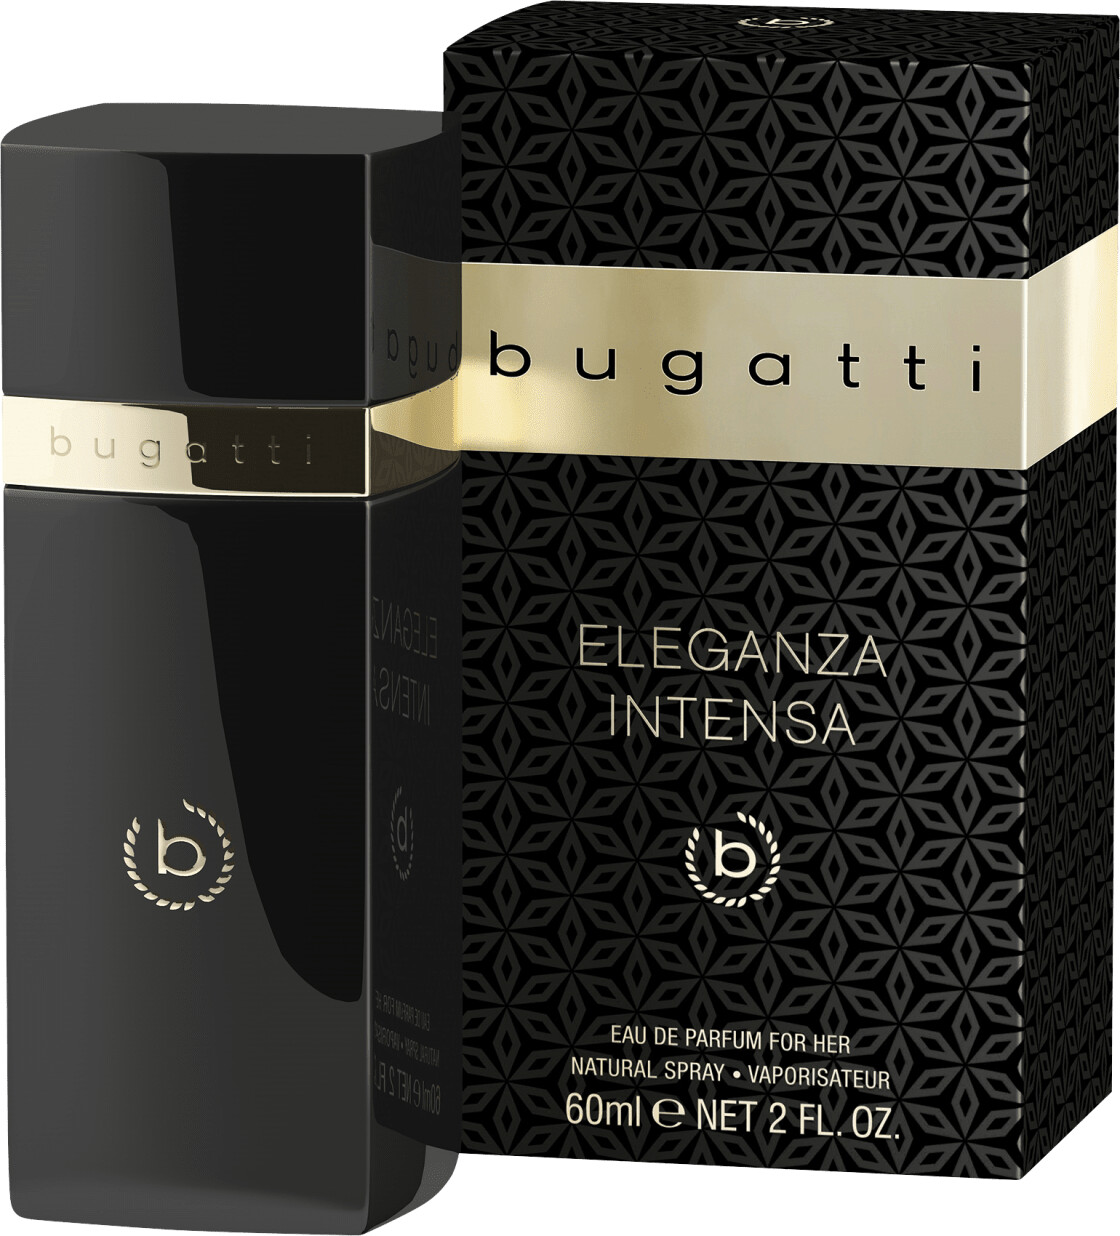 Bugatti Eleganza Intensa Eau de | Parfum € (60ml) bei ab 17,95 Preisvergleich